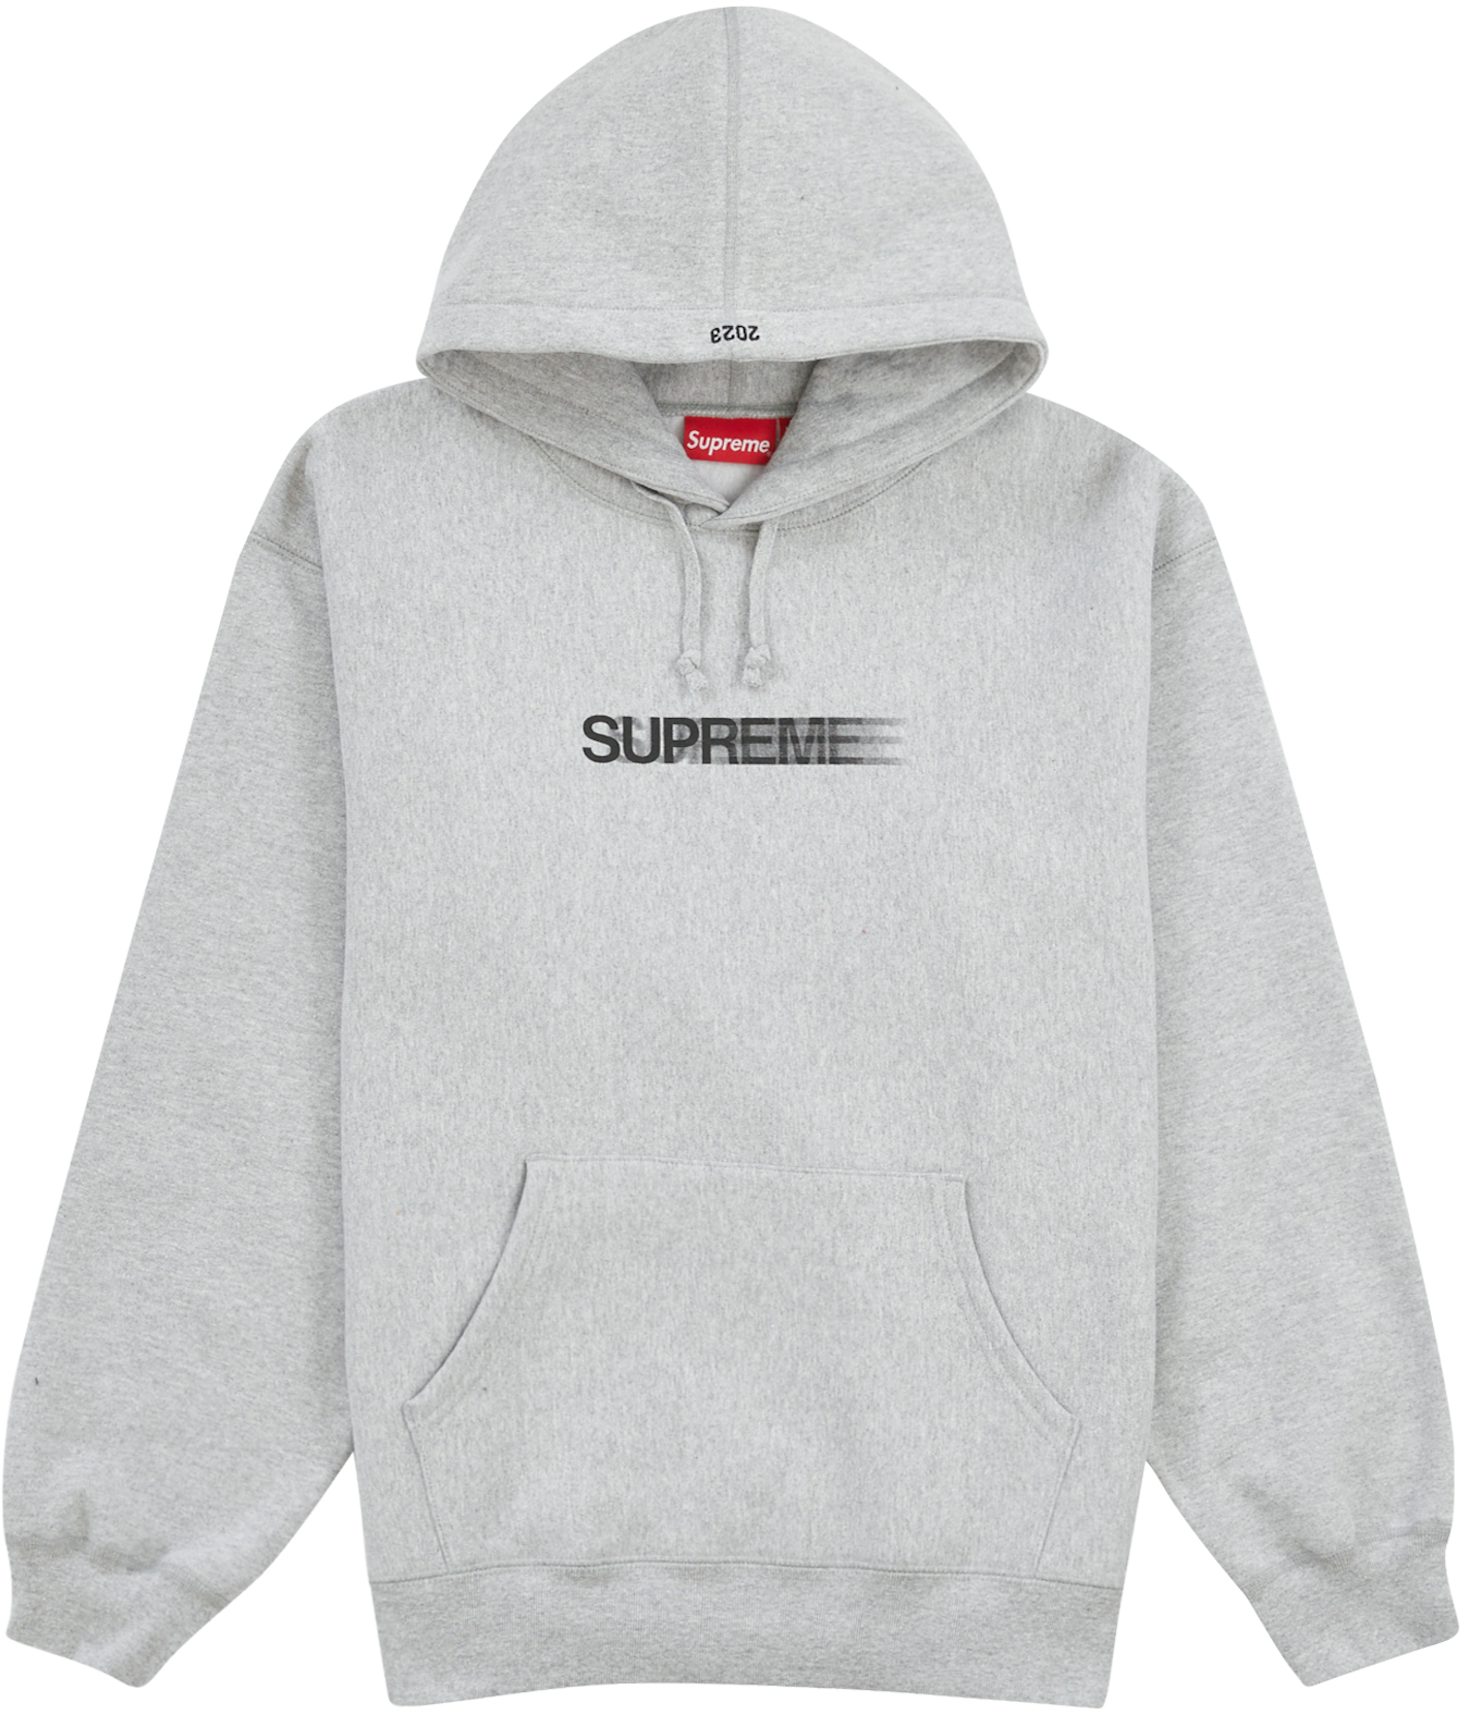 How to spot fake Supreme Louis Vuitton hoodies